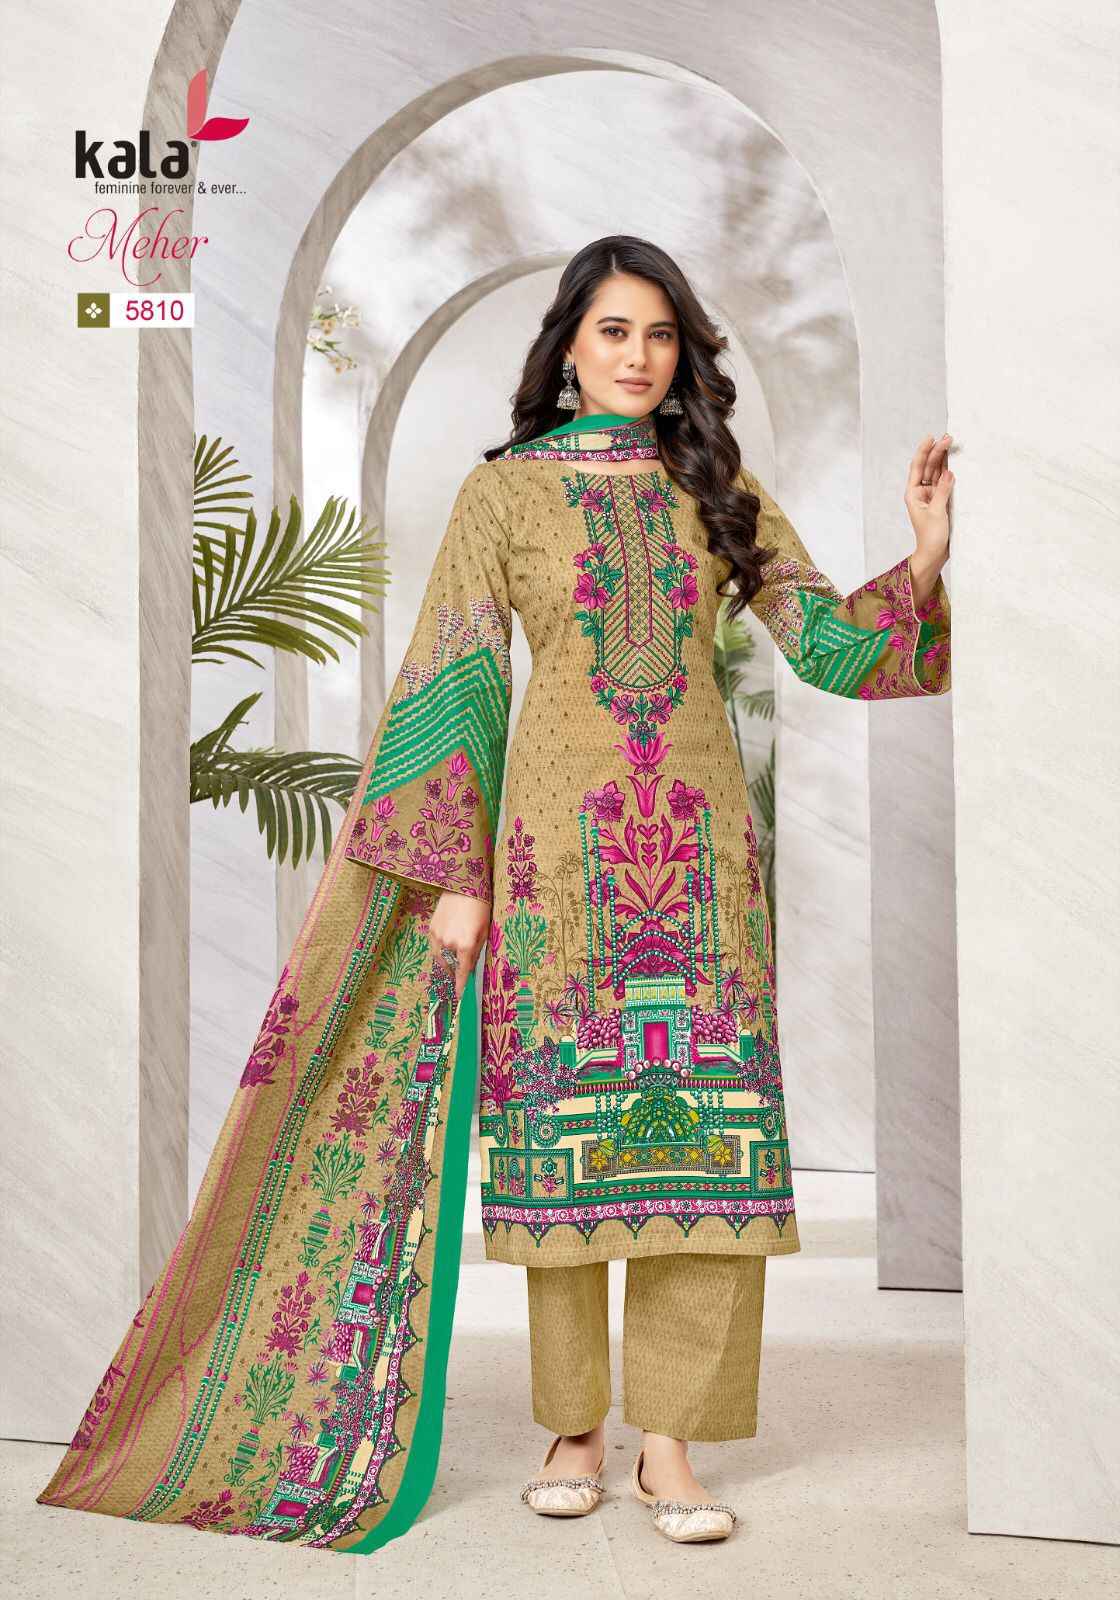 Kala Meher Vol-10 Pure Premium Cotton Dress Material (12 pcs Catalogue)